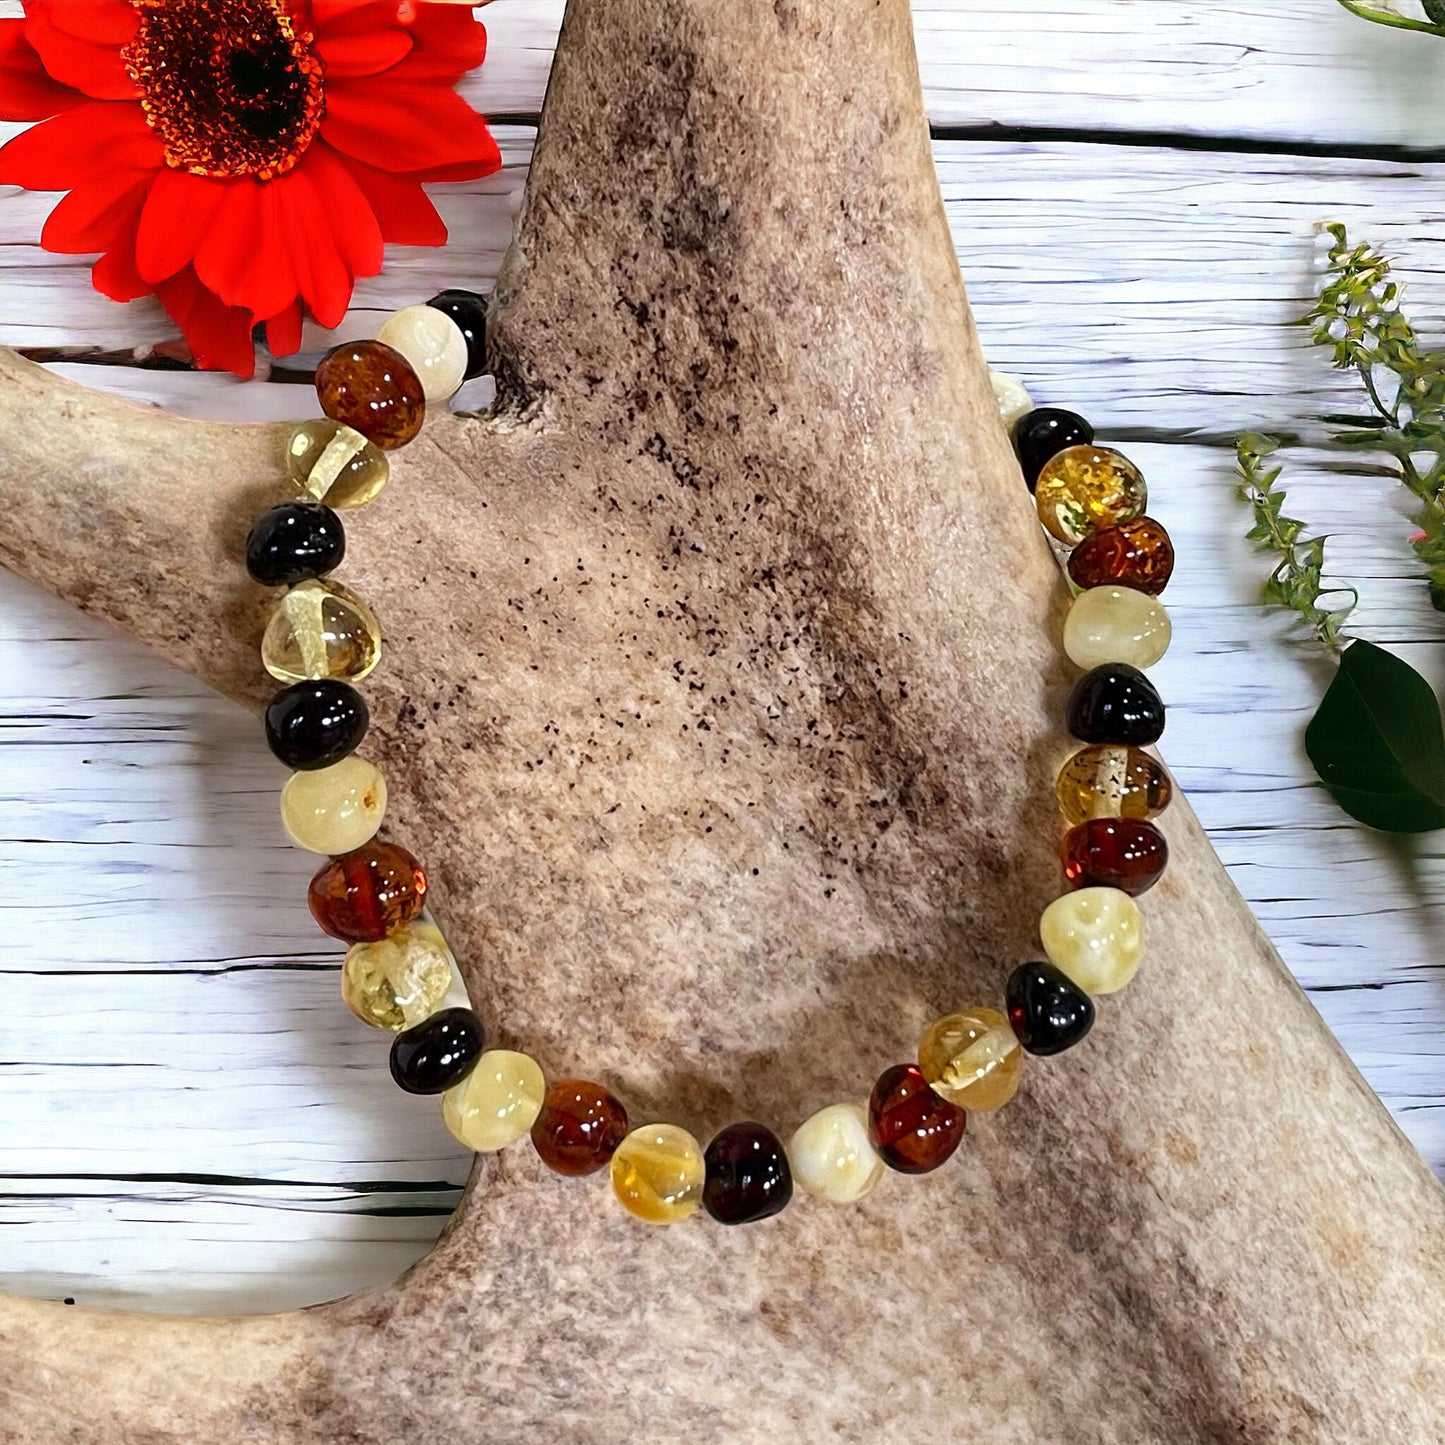 Amber Multi-Stone Healing Bracelet ~ Creativity